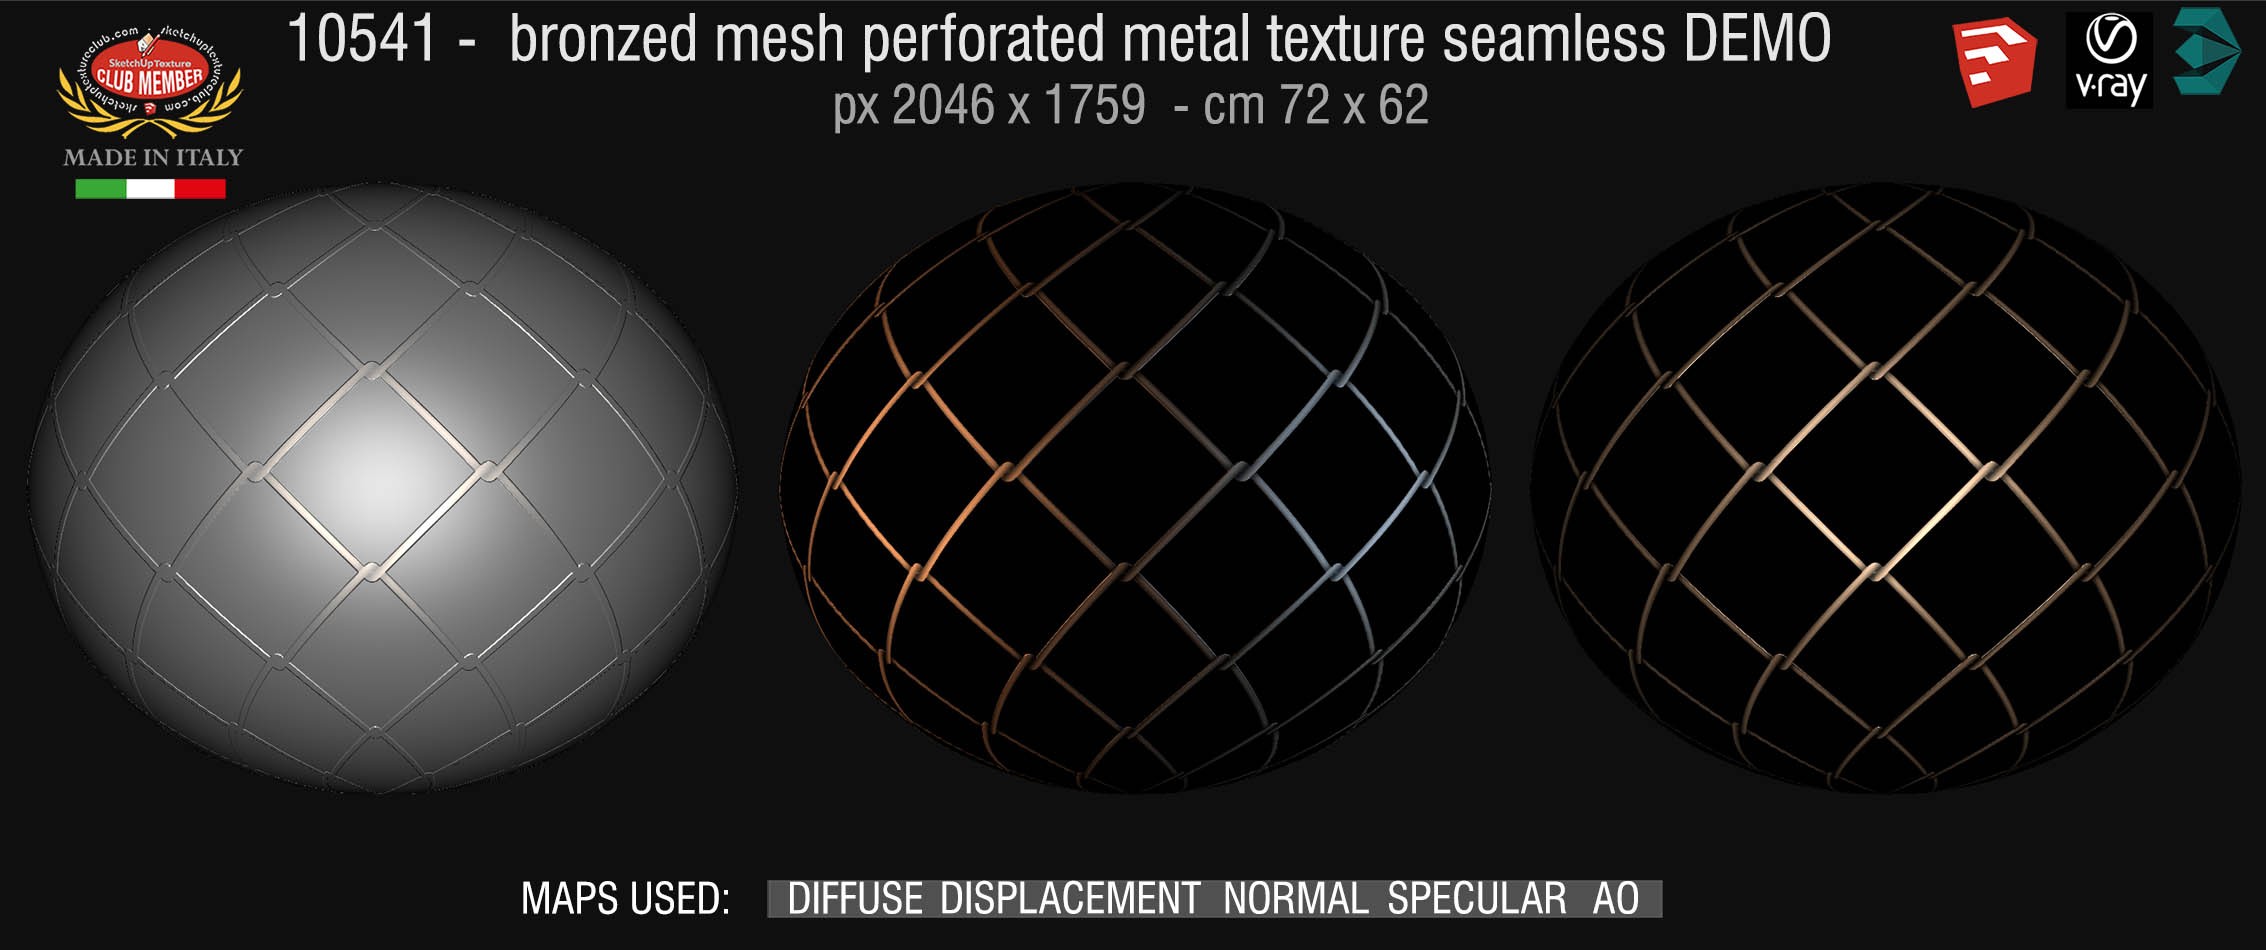 10541 HR Bronzed mesh perforate metal texture seamless + maps DEMO